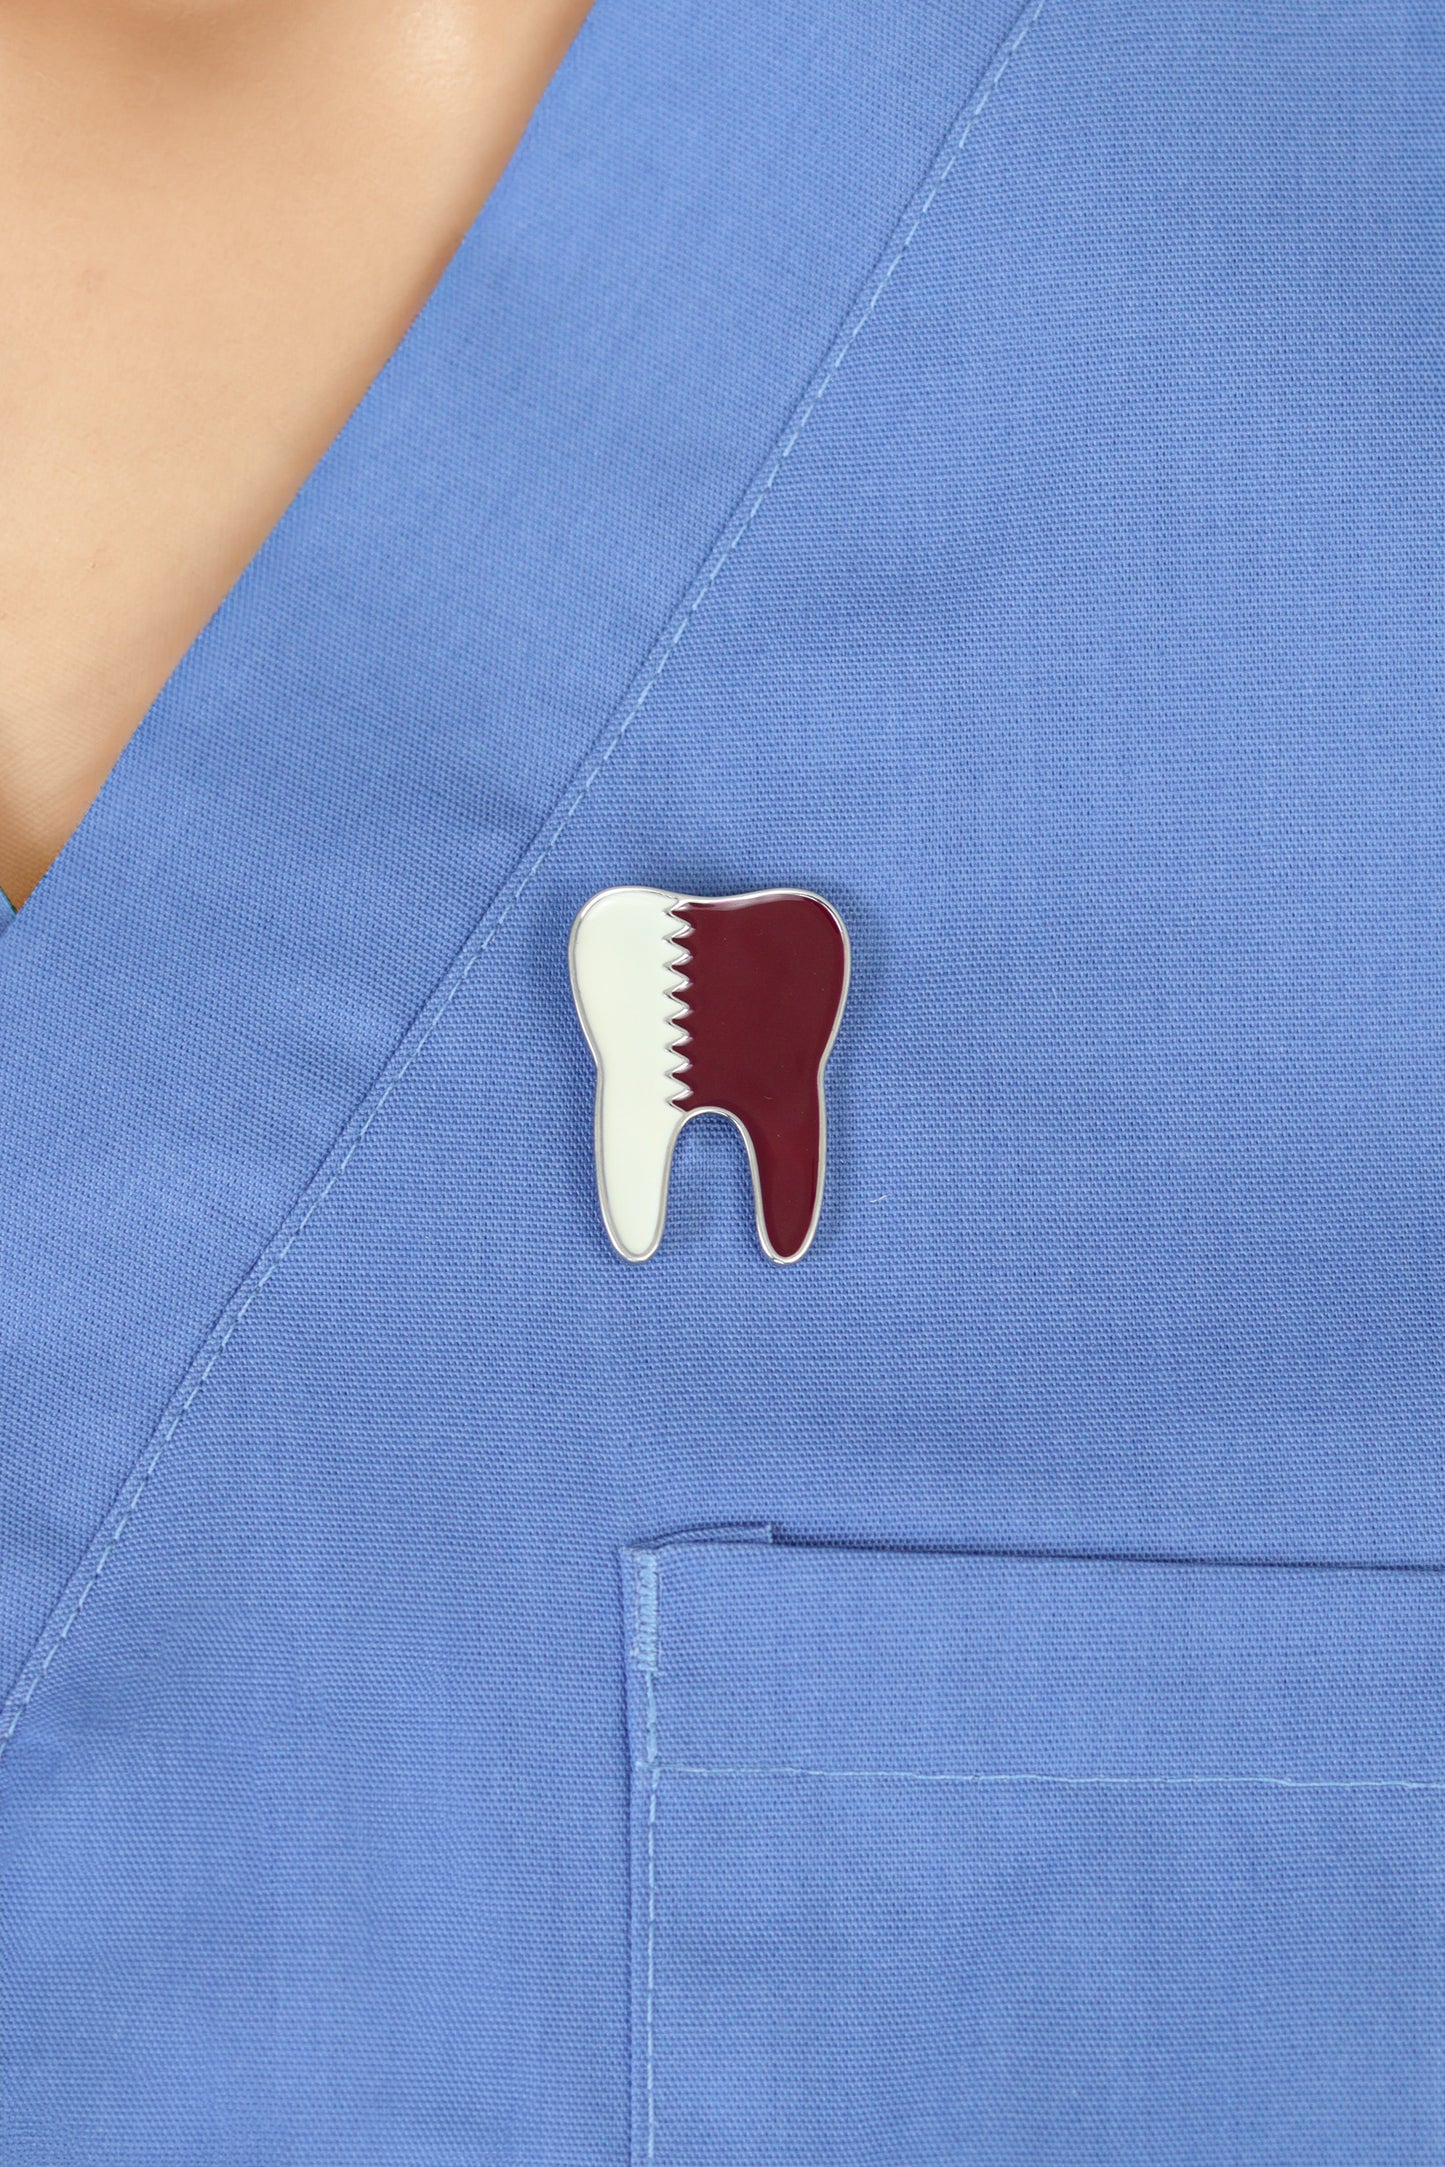 Qatar Tooth Pin